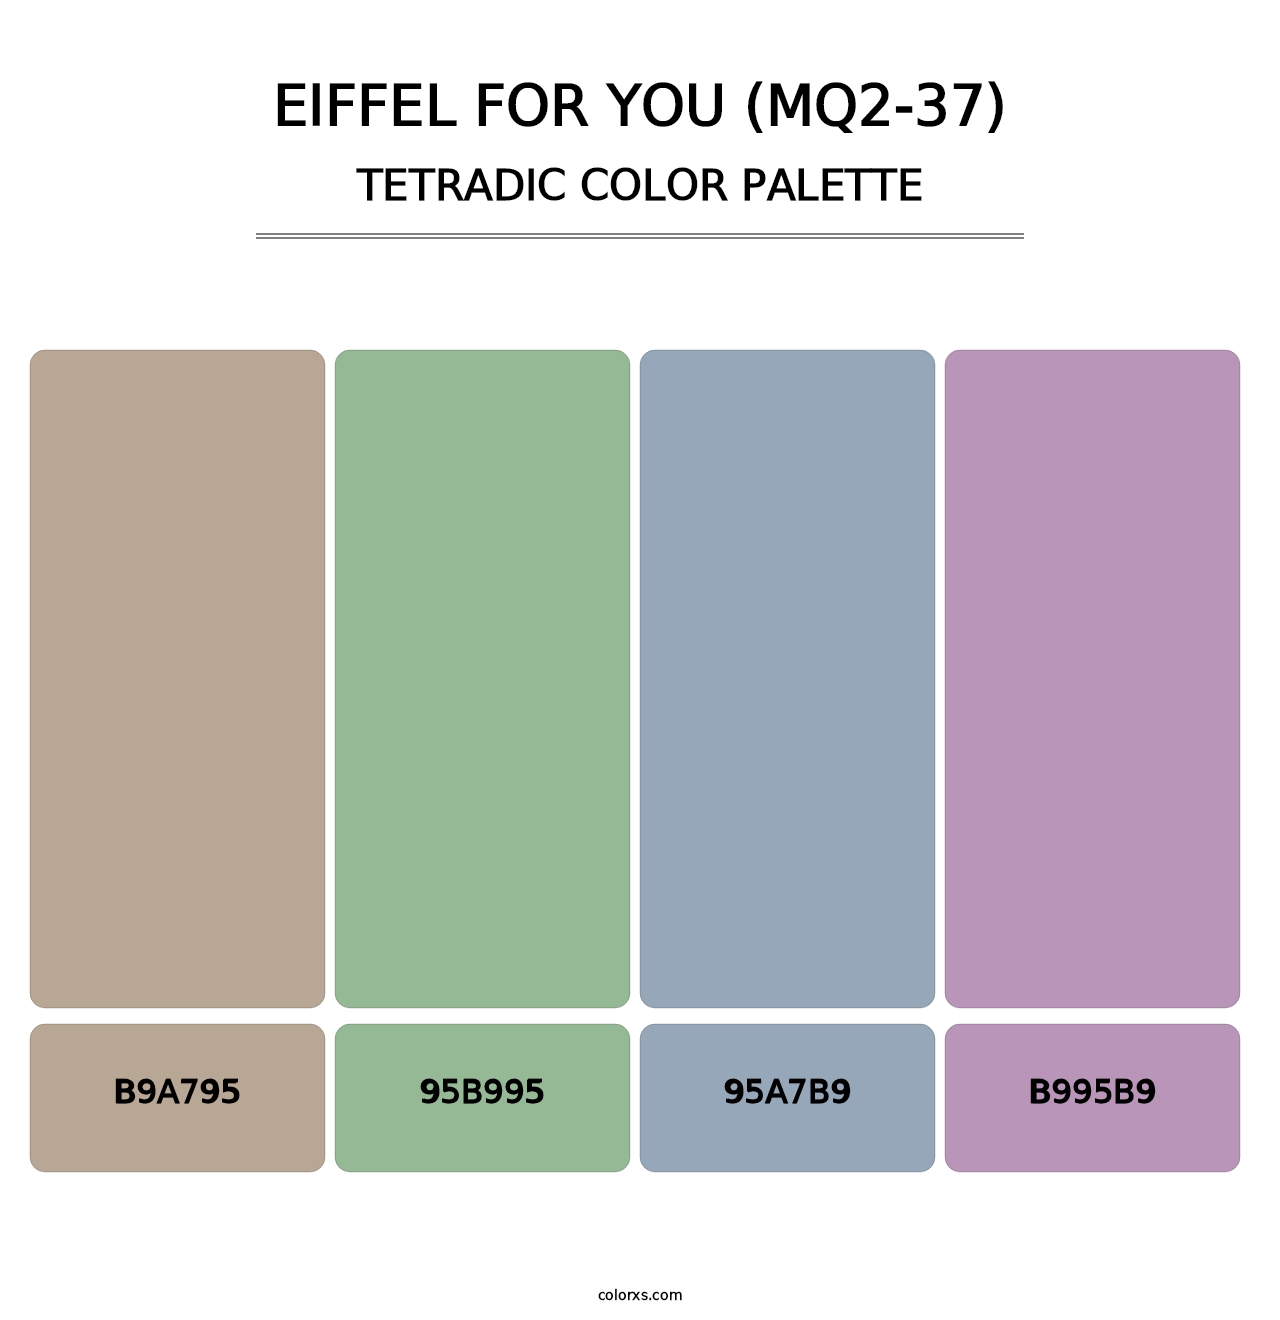 Eiffel For You (MQ2-37) - Tetradic Color Palette